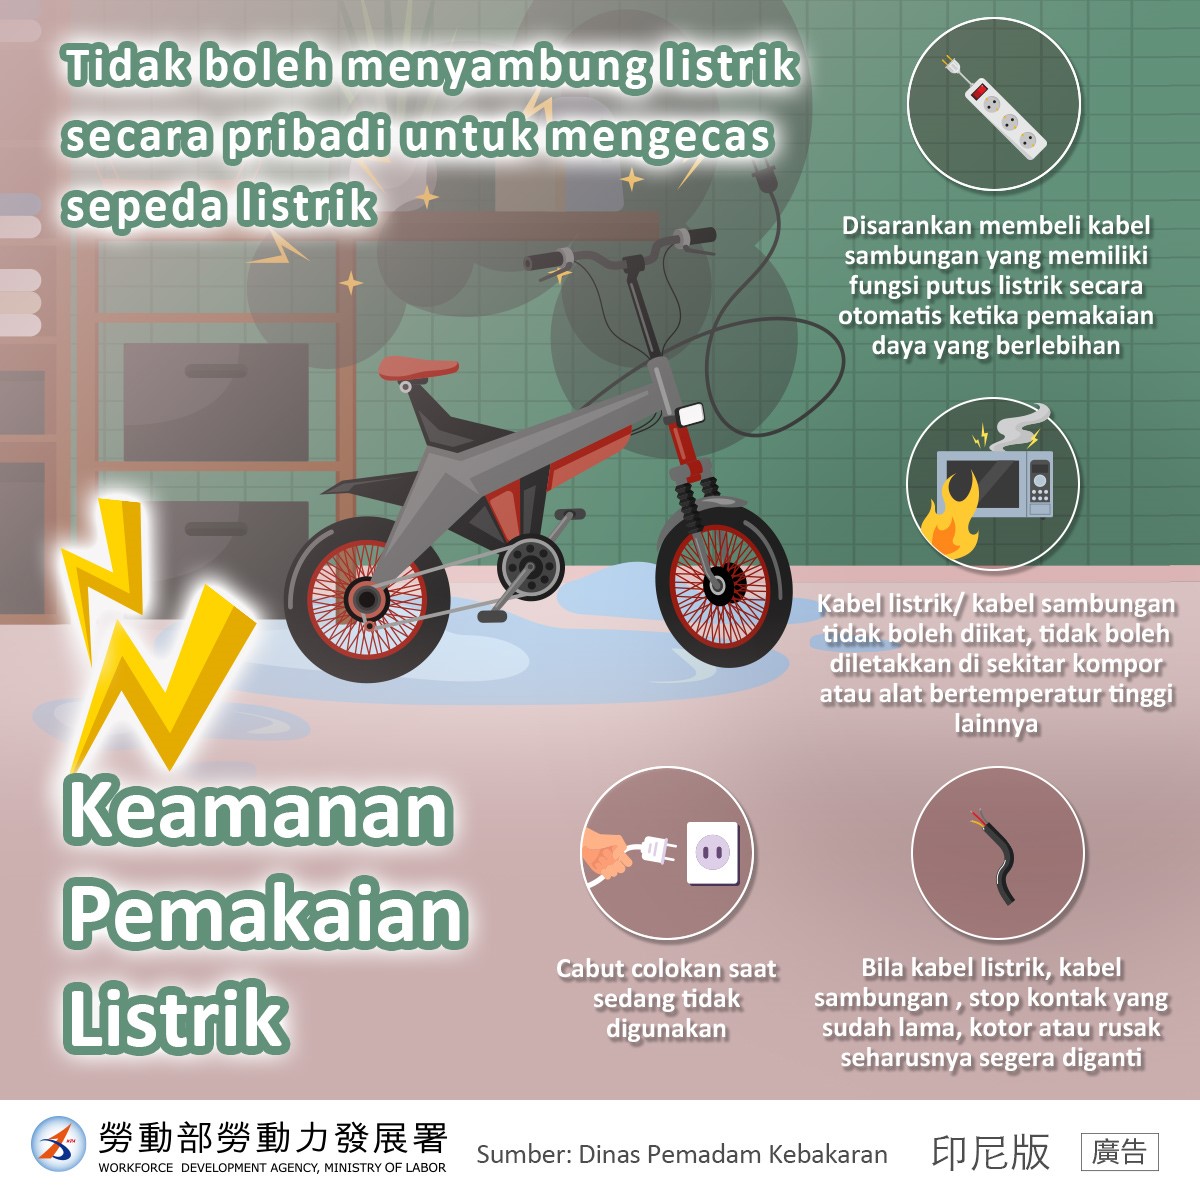 Keamanan Pemakaian Listrik - Tidak boleh menyambung listrik secara pribadi untuk mengecas sepeda listrik